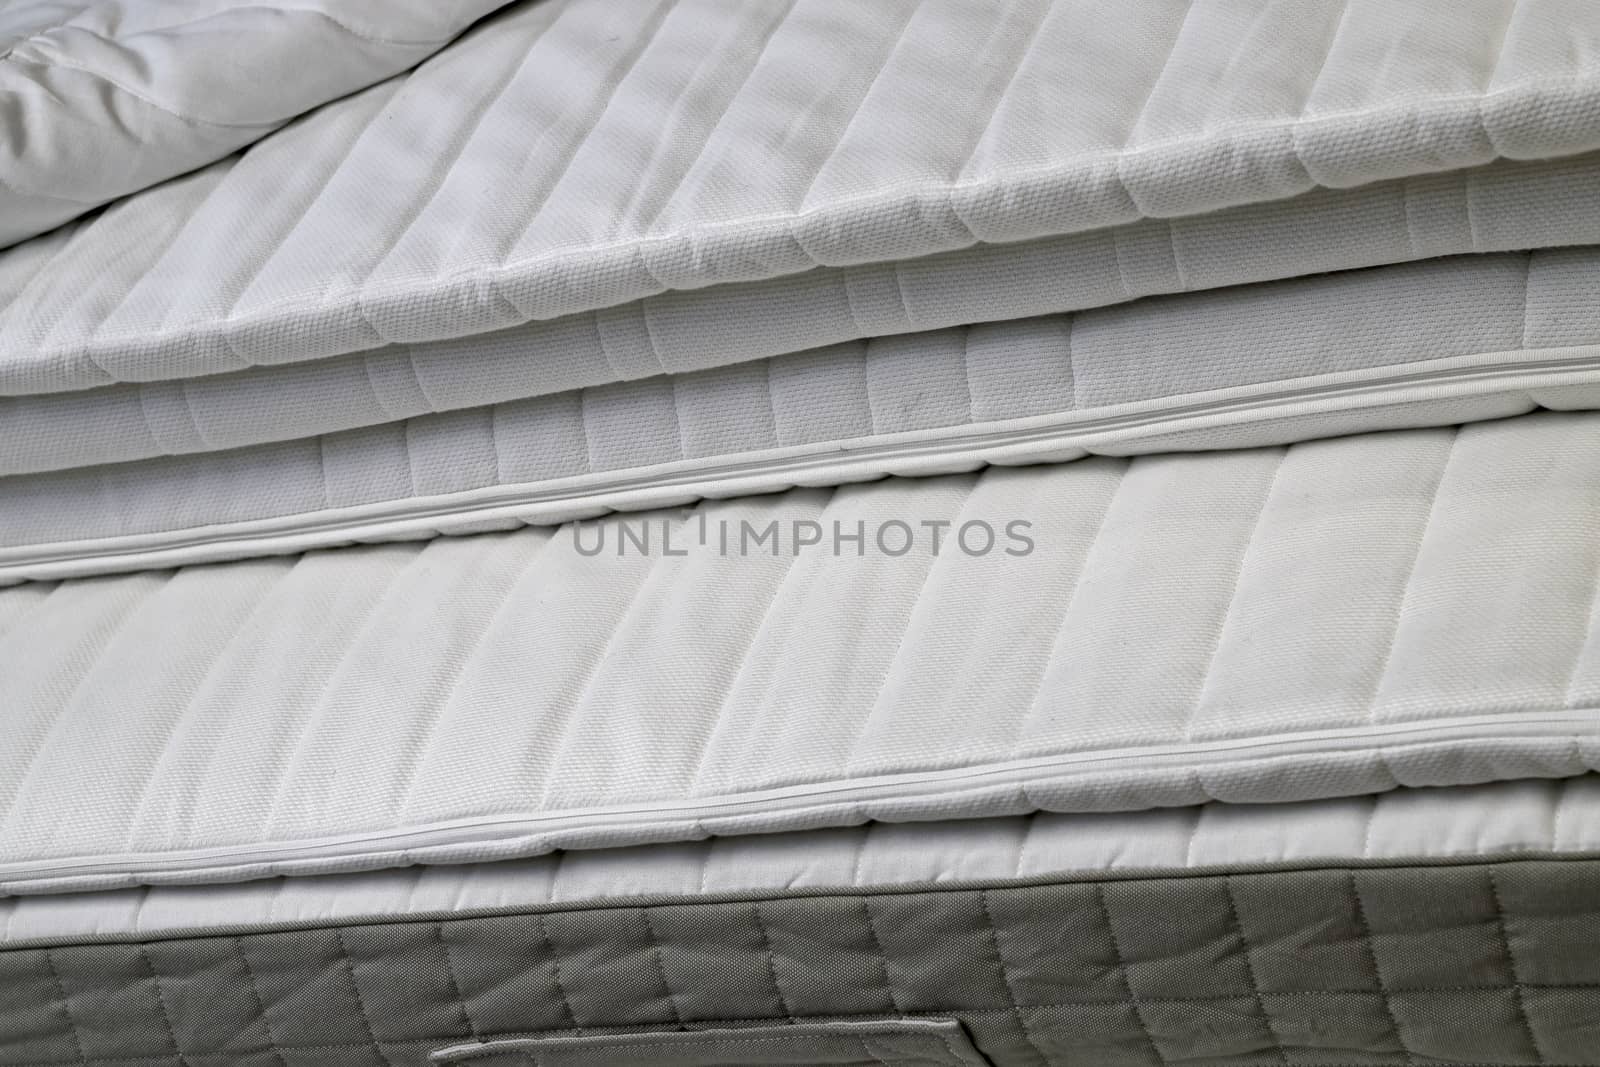 Folded white new bed mattresses filmed close-up